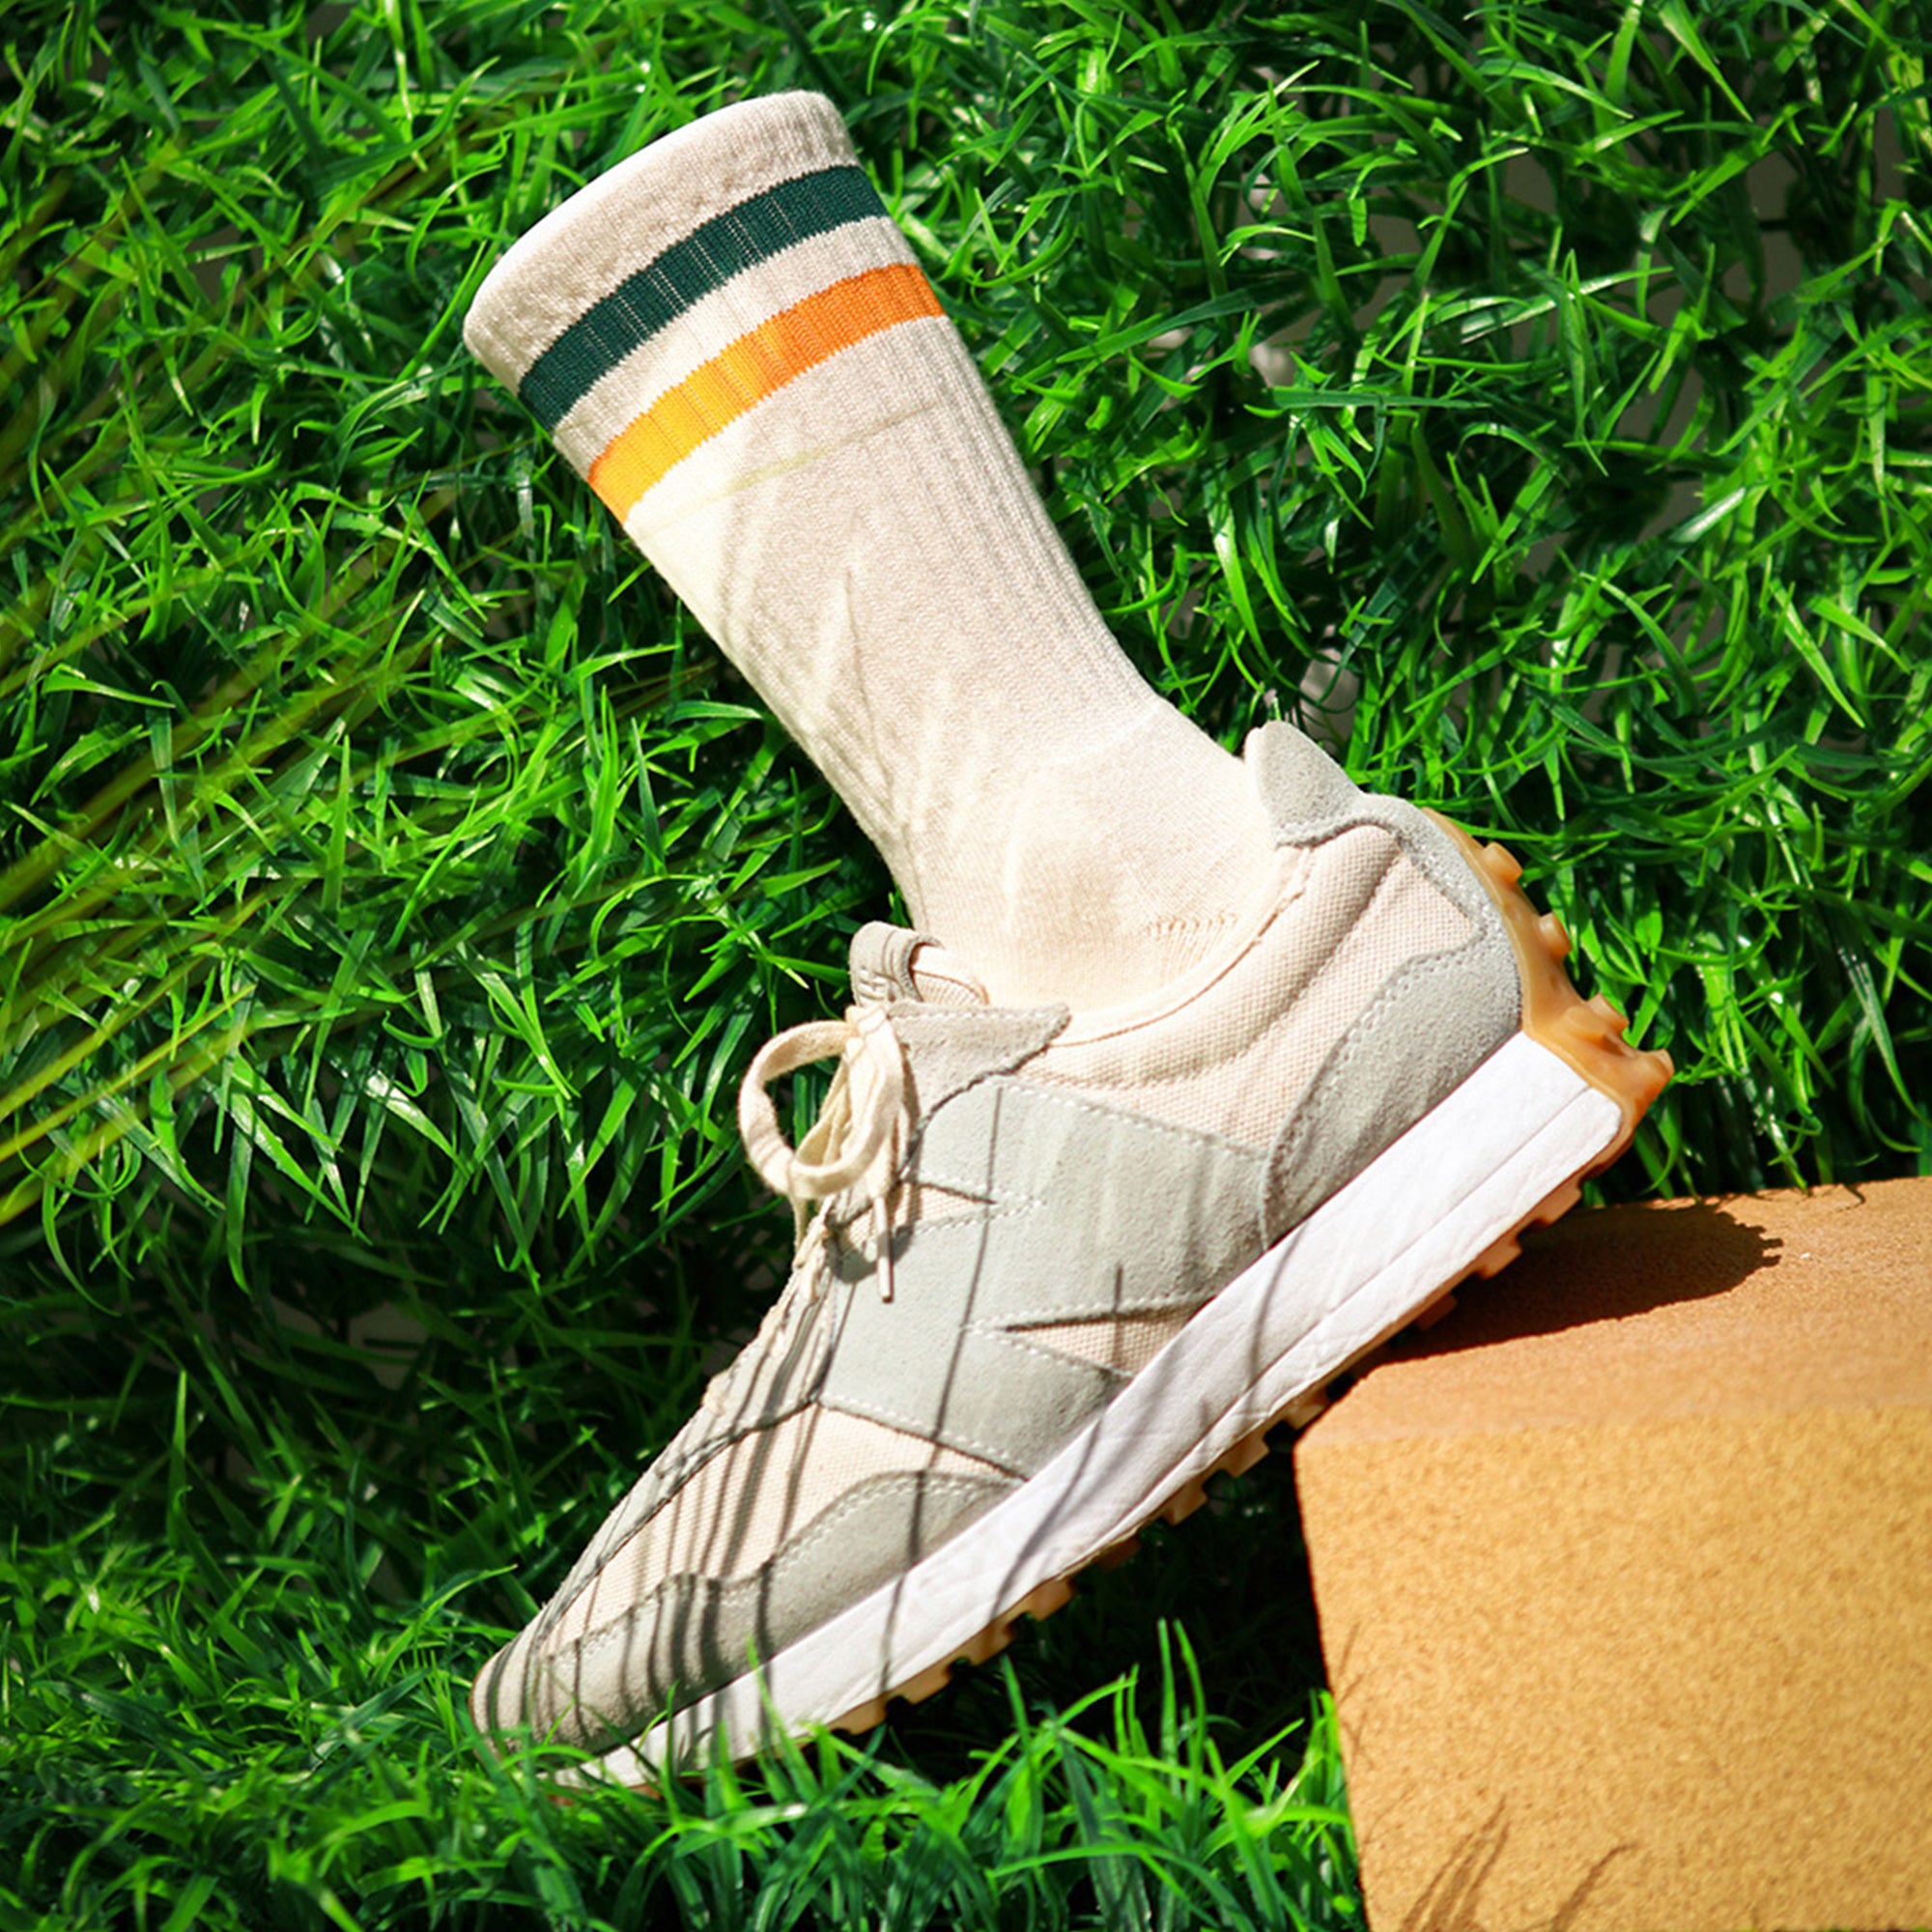 Men&#39;s Vintage Stripe Socks - Green, Orange, and Cream